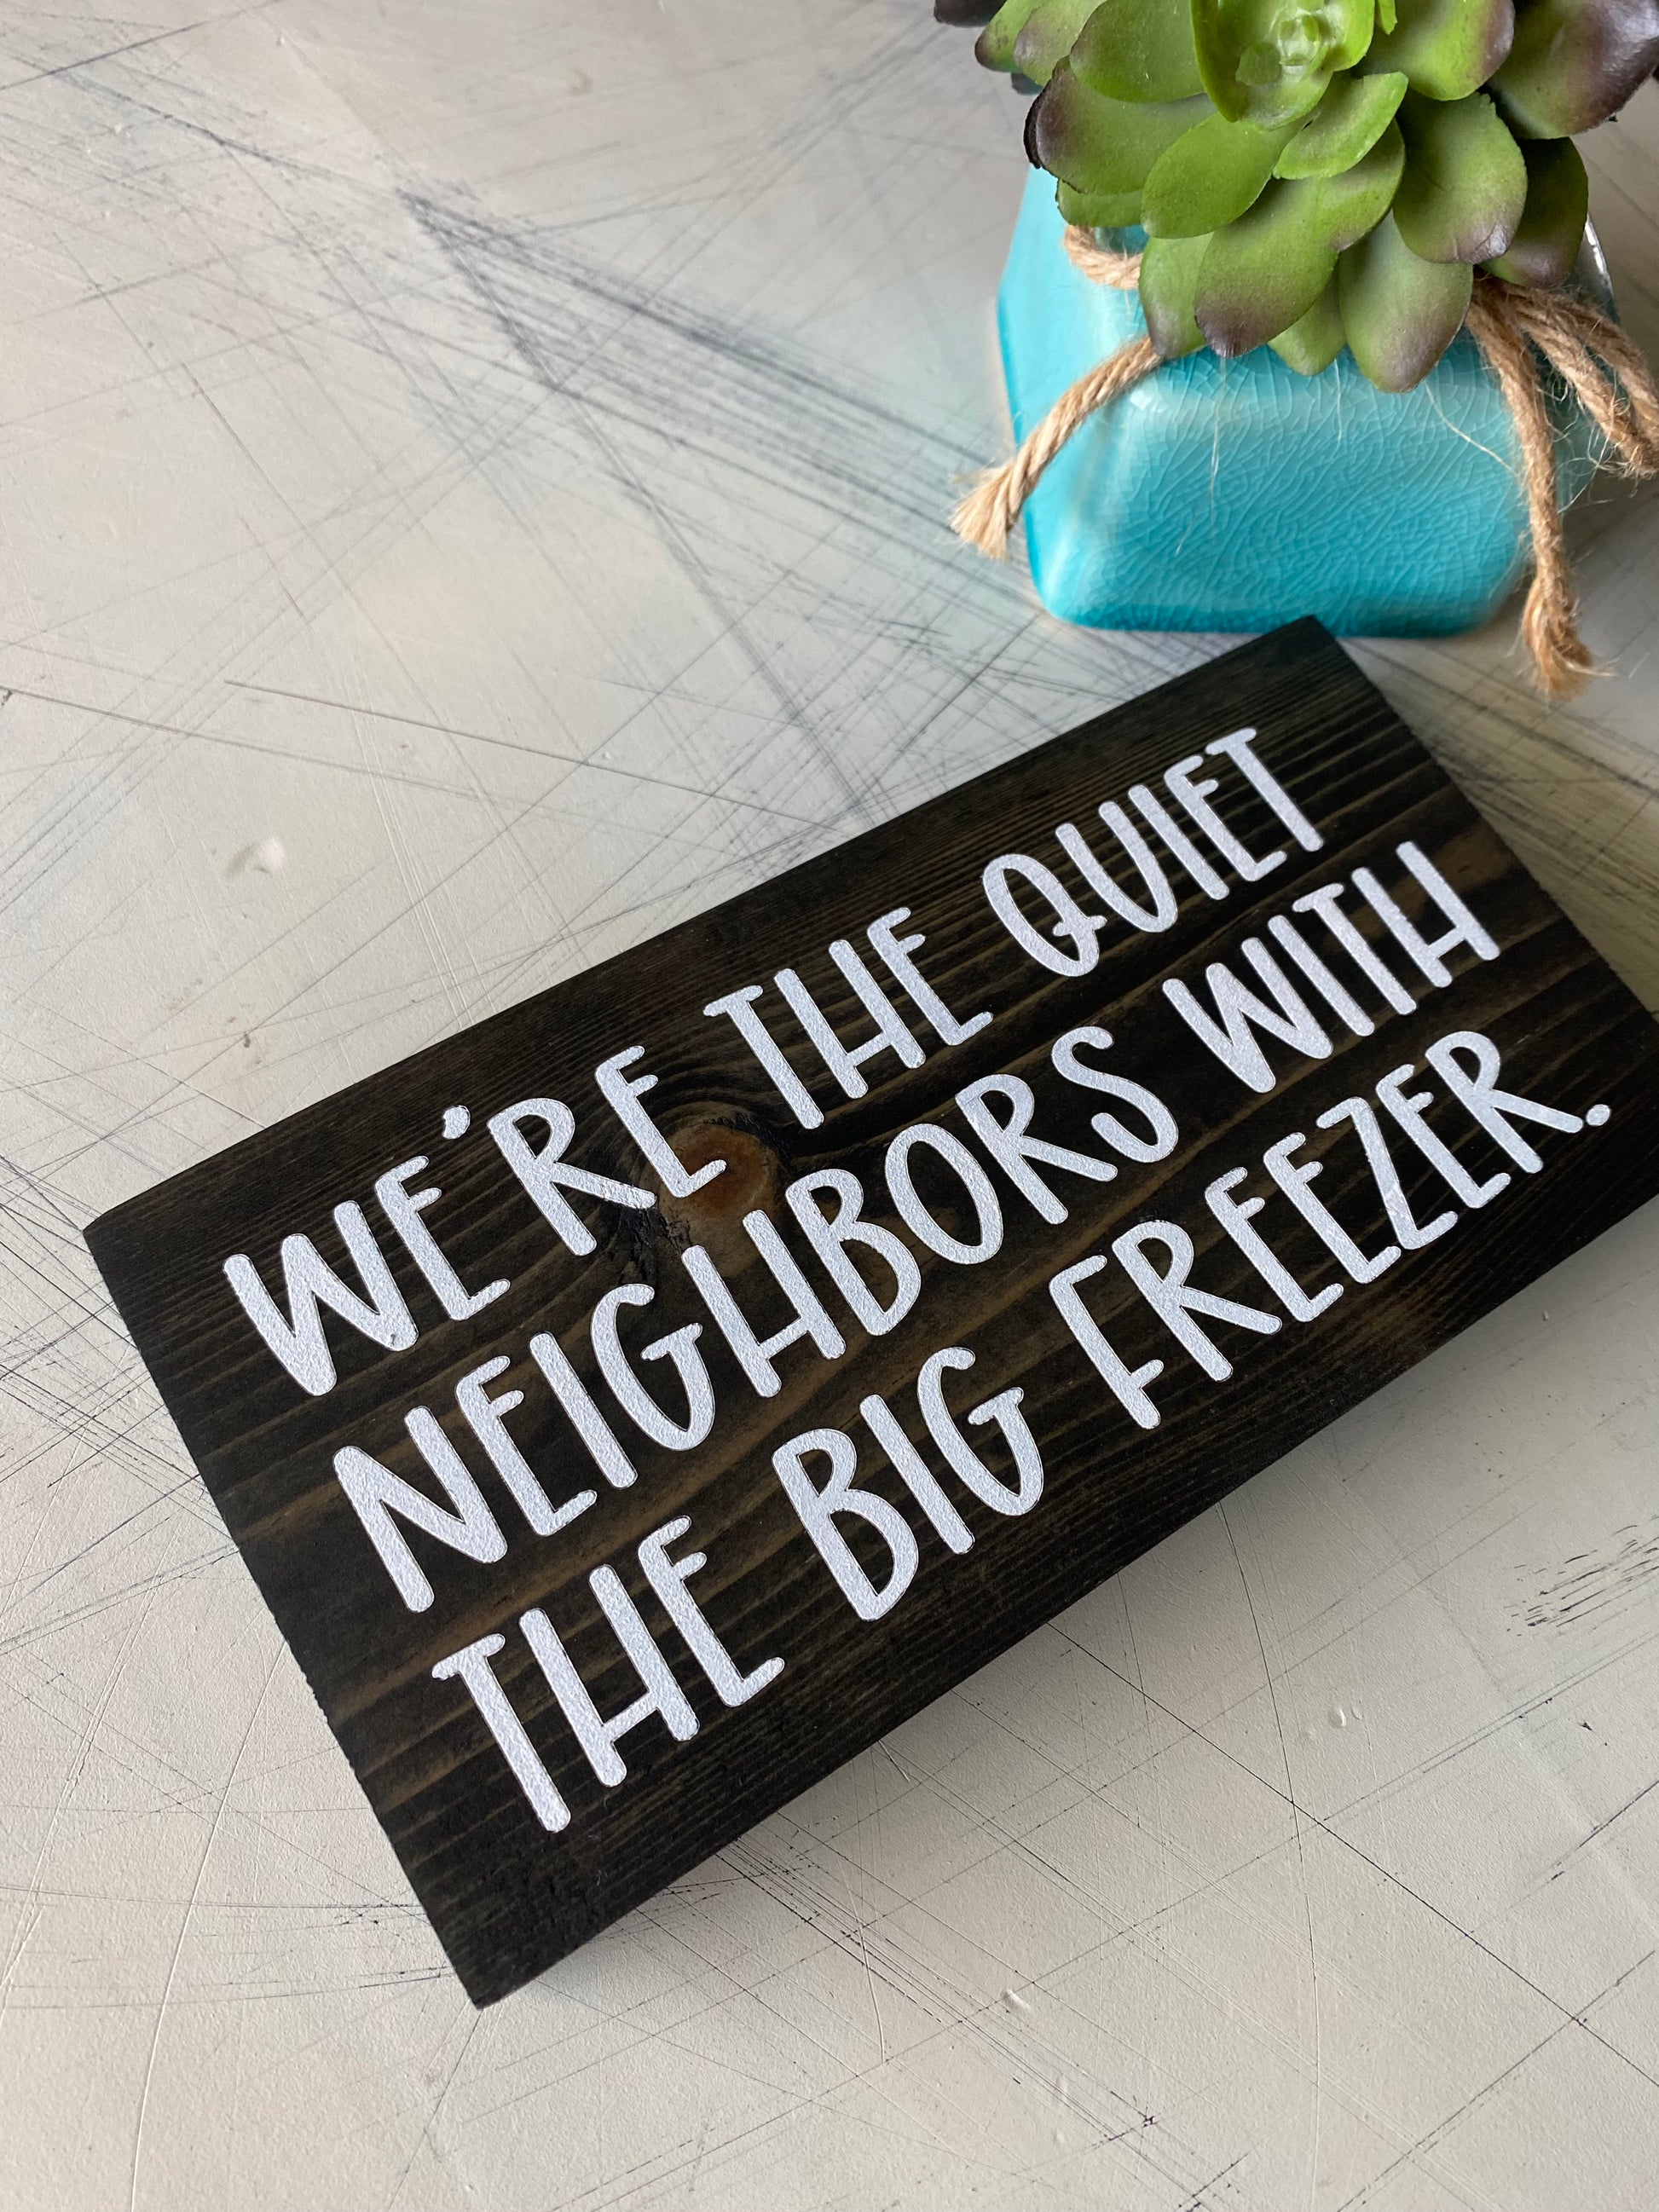 We're the quiet neighbors with the big freezer. - true crime - handmade mini wood sign